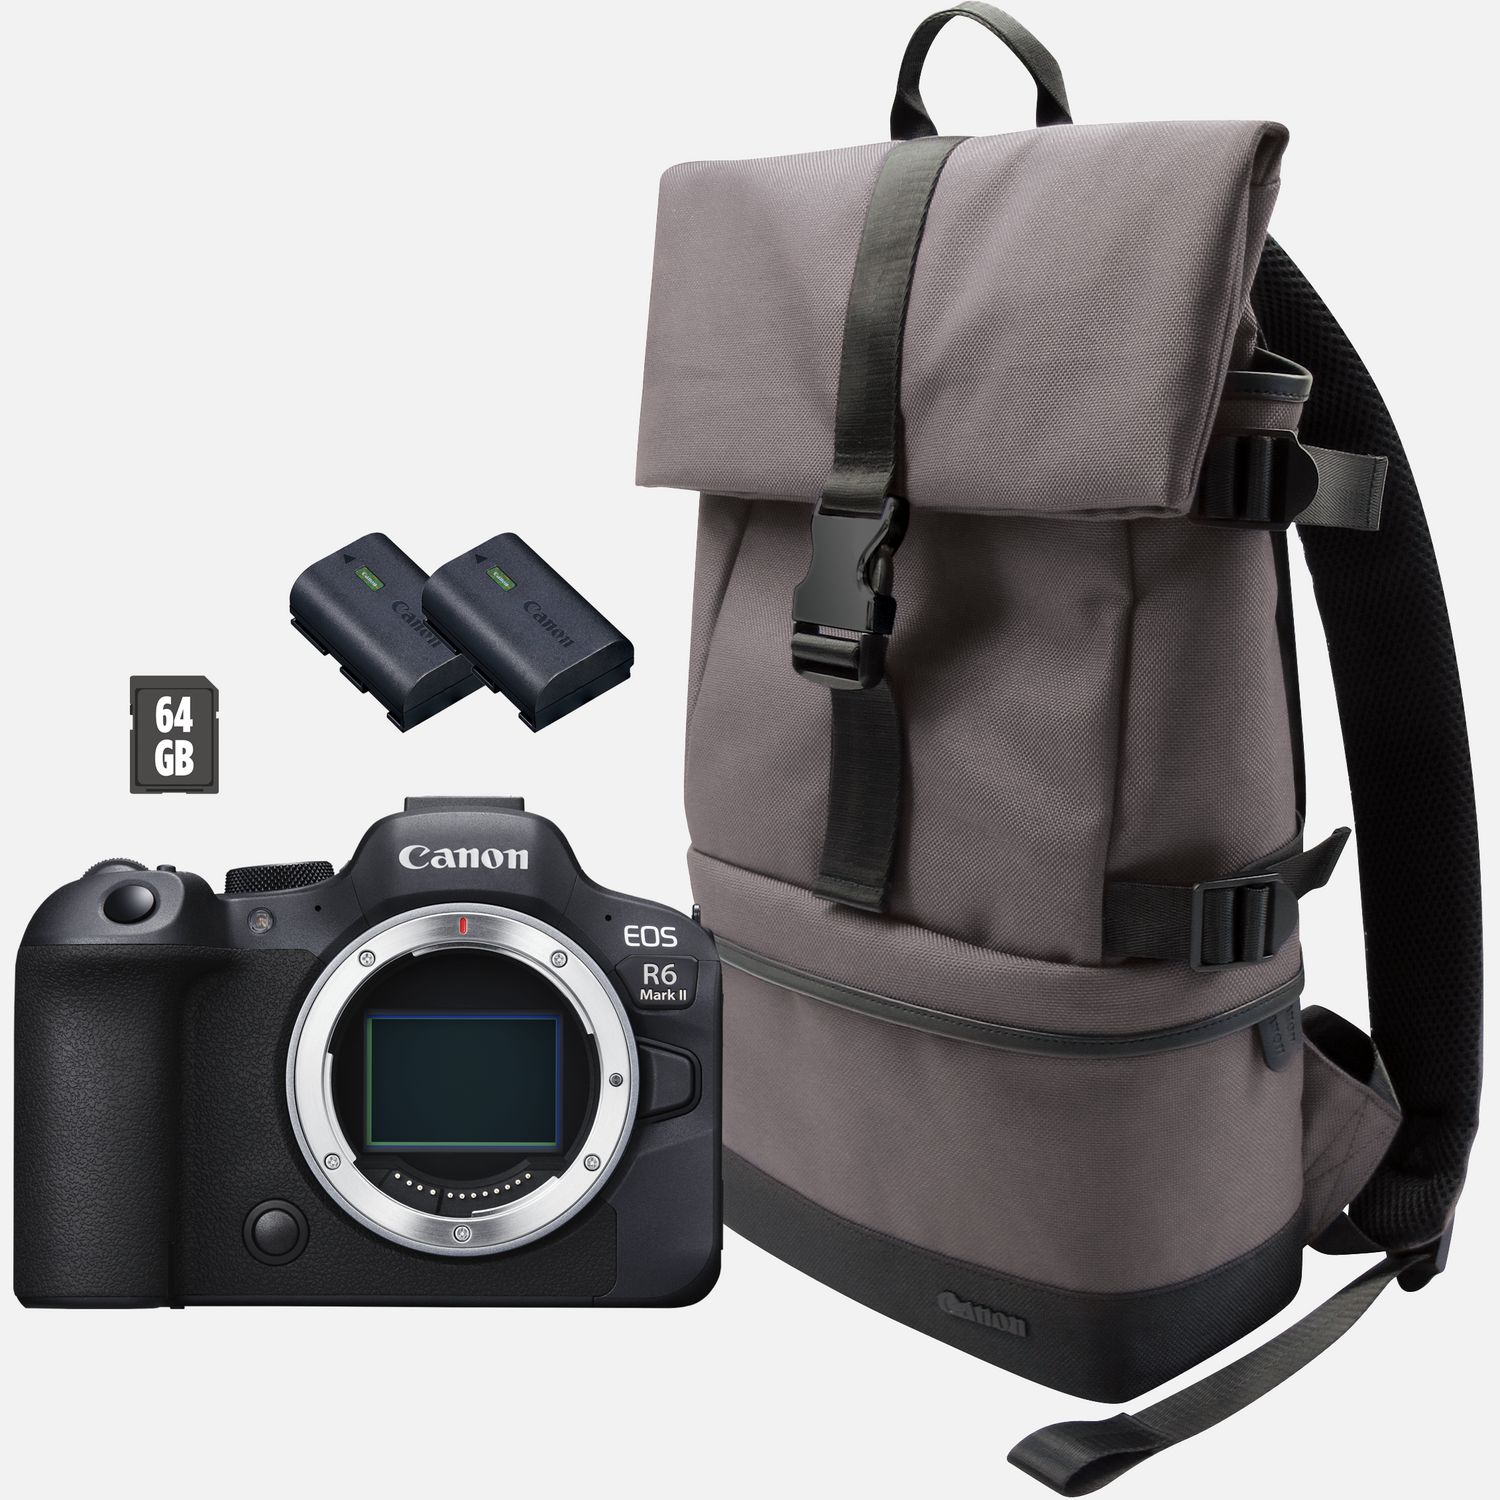 Appareil photo hybride Canon EOS R6 Mark II, noir + sac à dos + carte SD + batterie supplémentaire